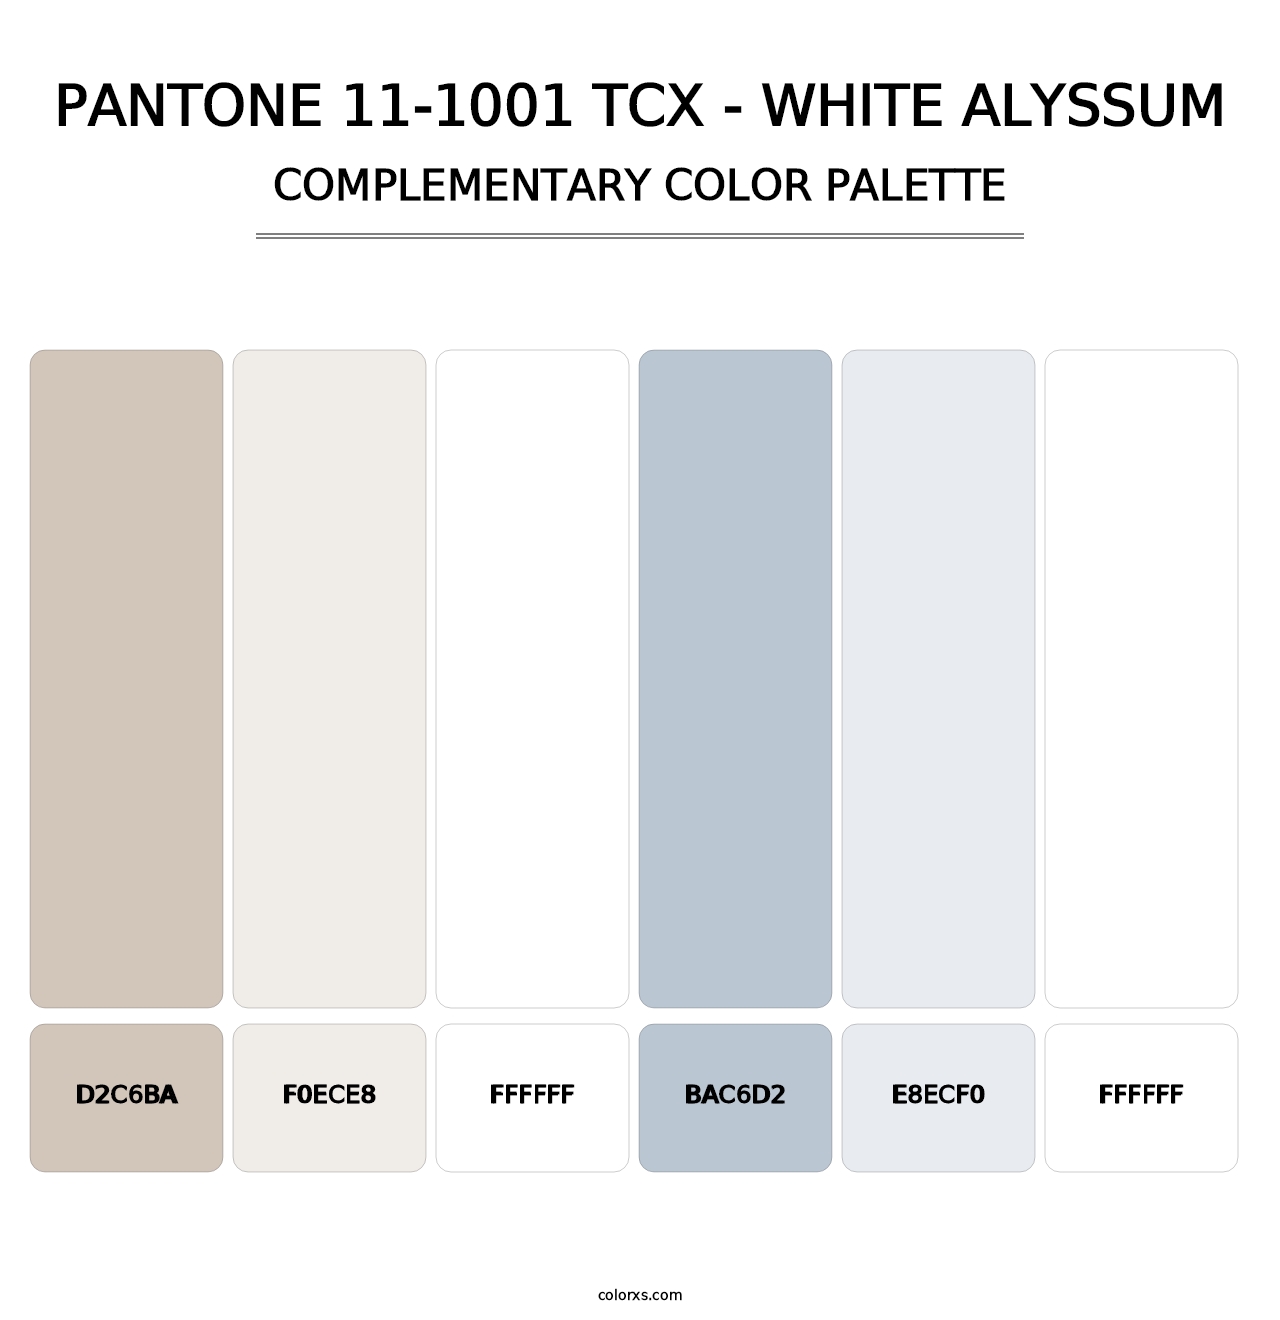 PANTONE 11-1001 TCX - White Alyssum - Complementary Color Palette